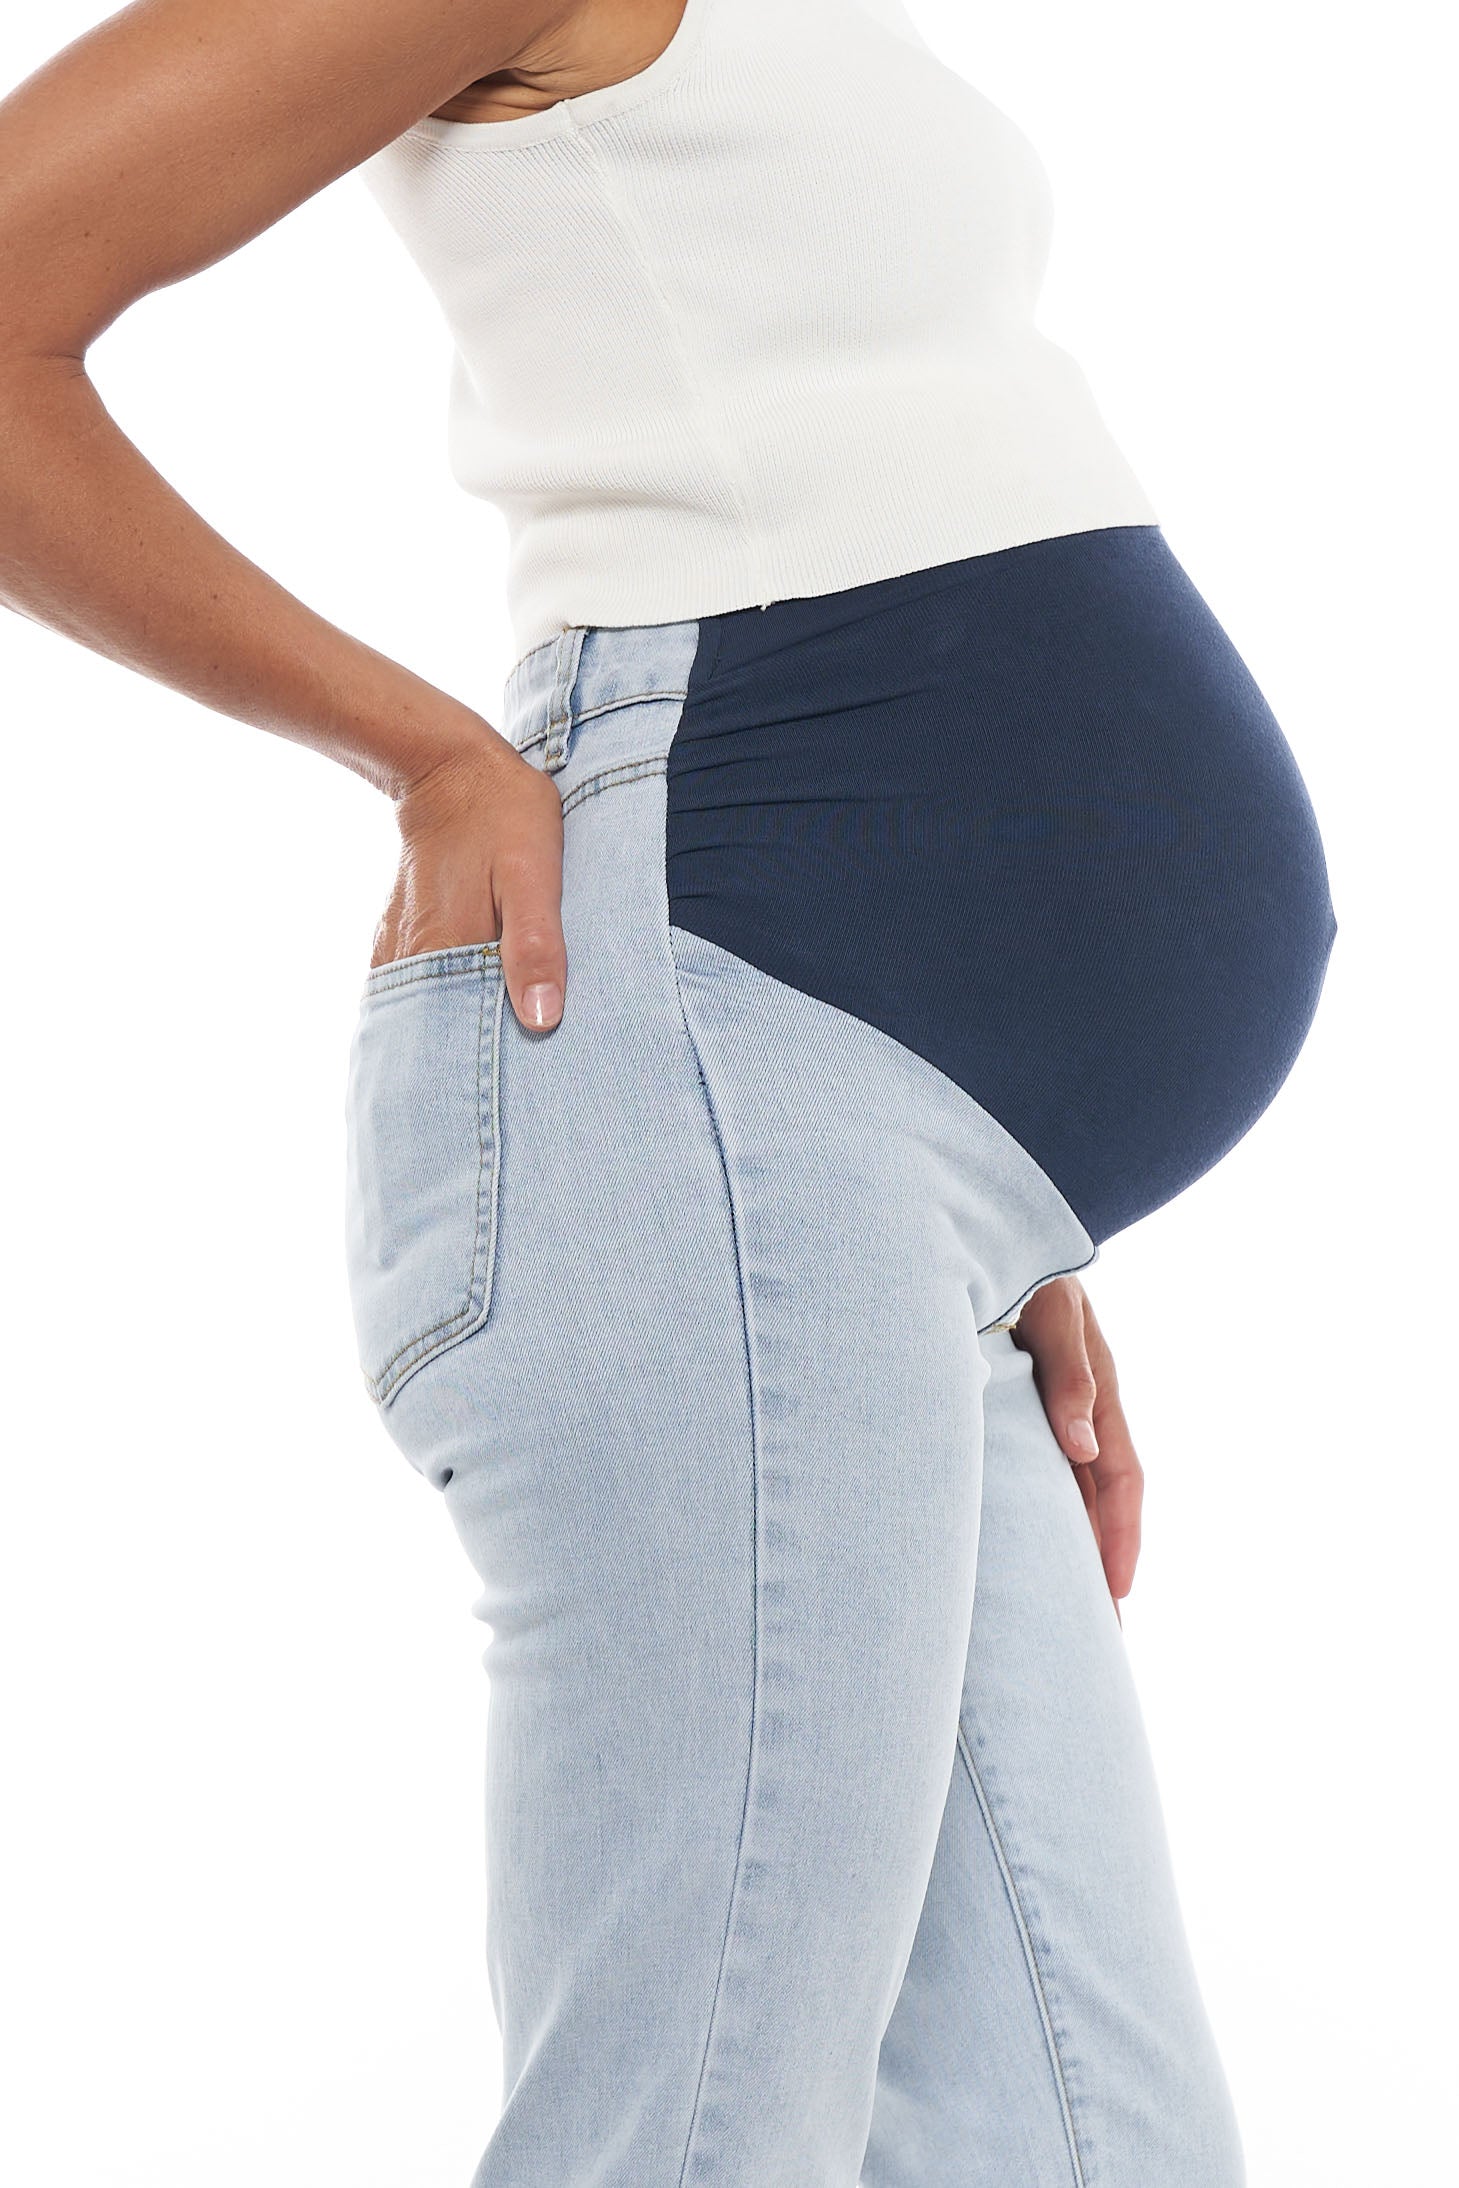 Maternity Jeans Capris - Buy Maternity Jeans Capris online in India